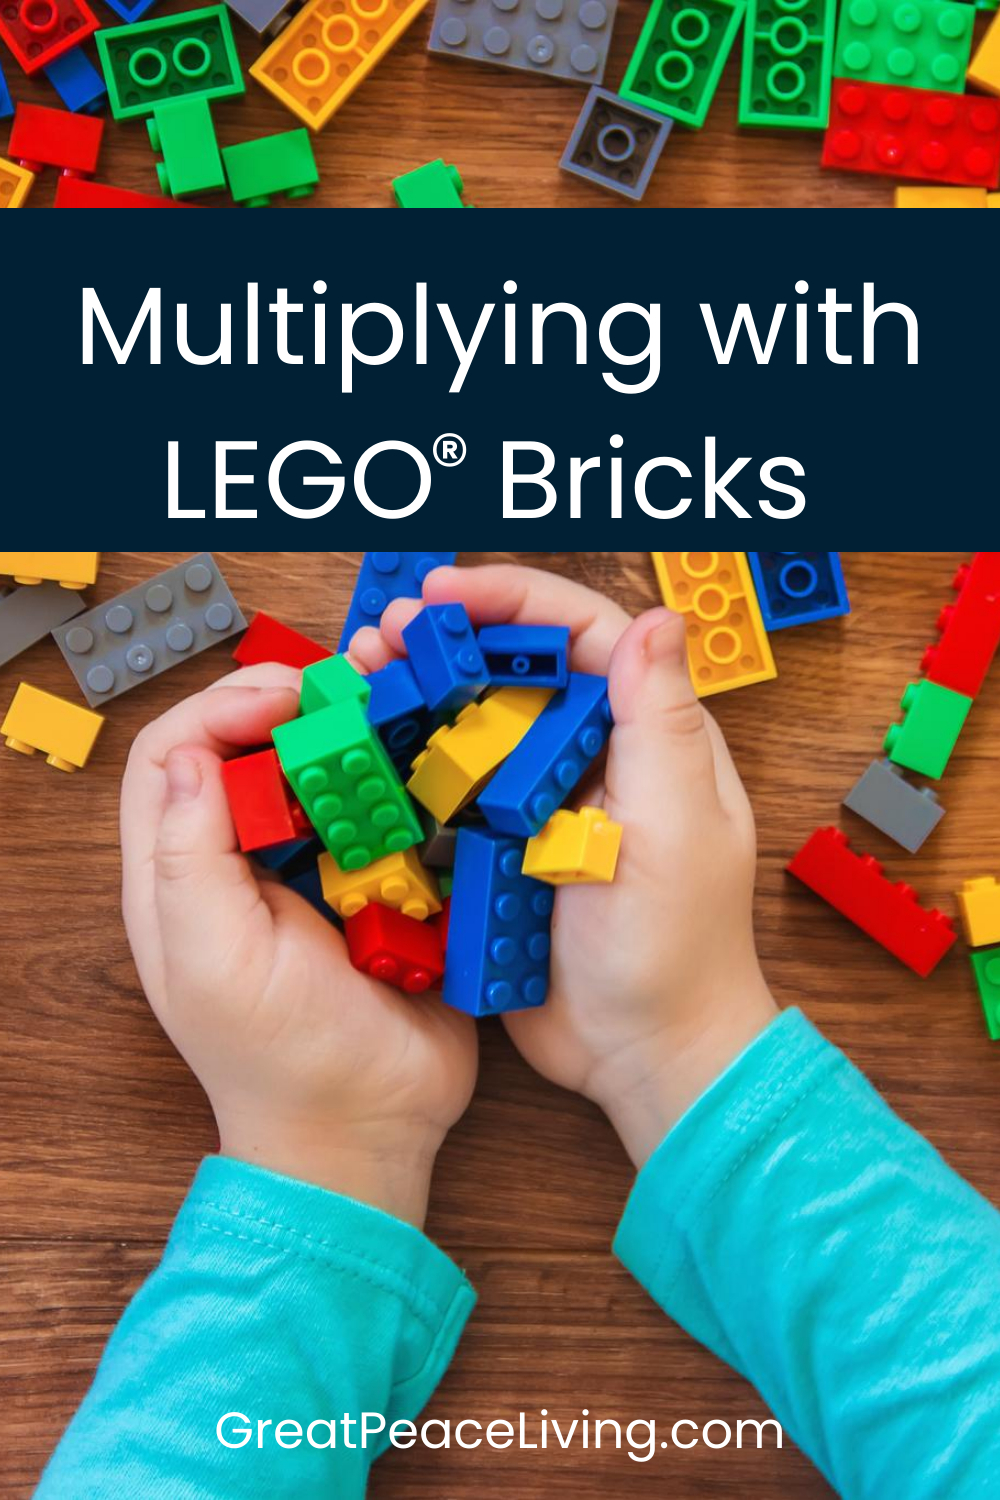 Multiplying with LEGO Bricks